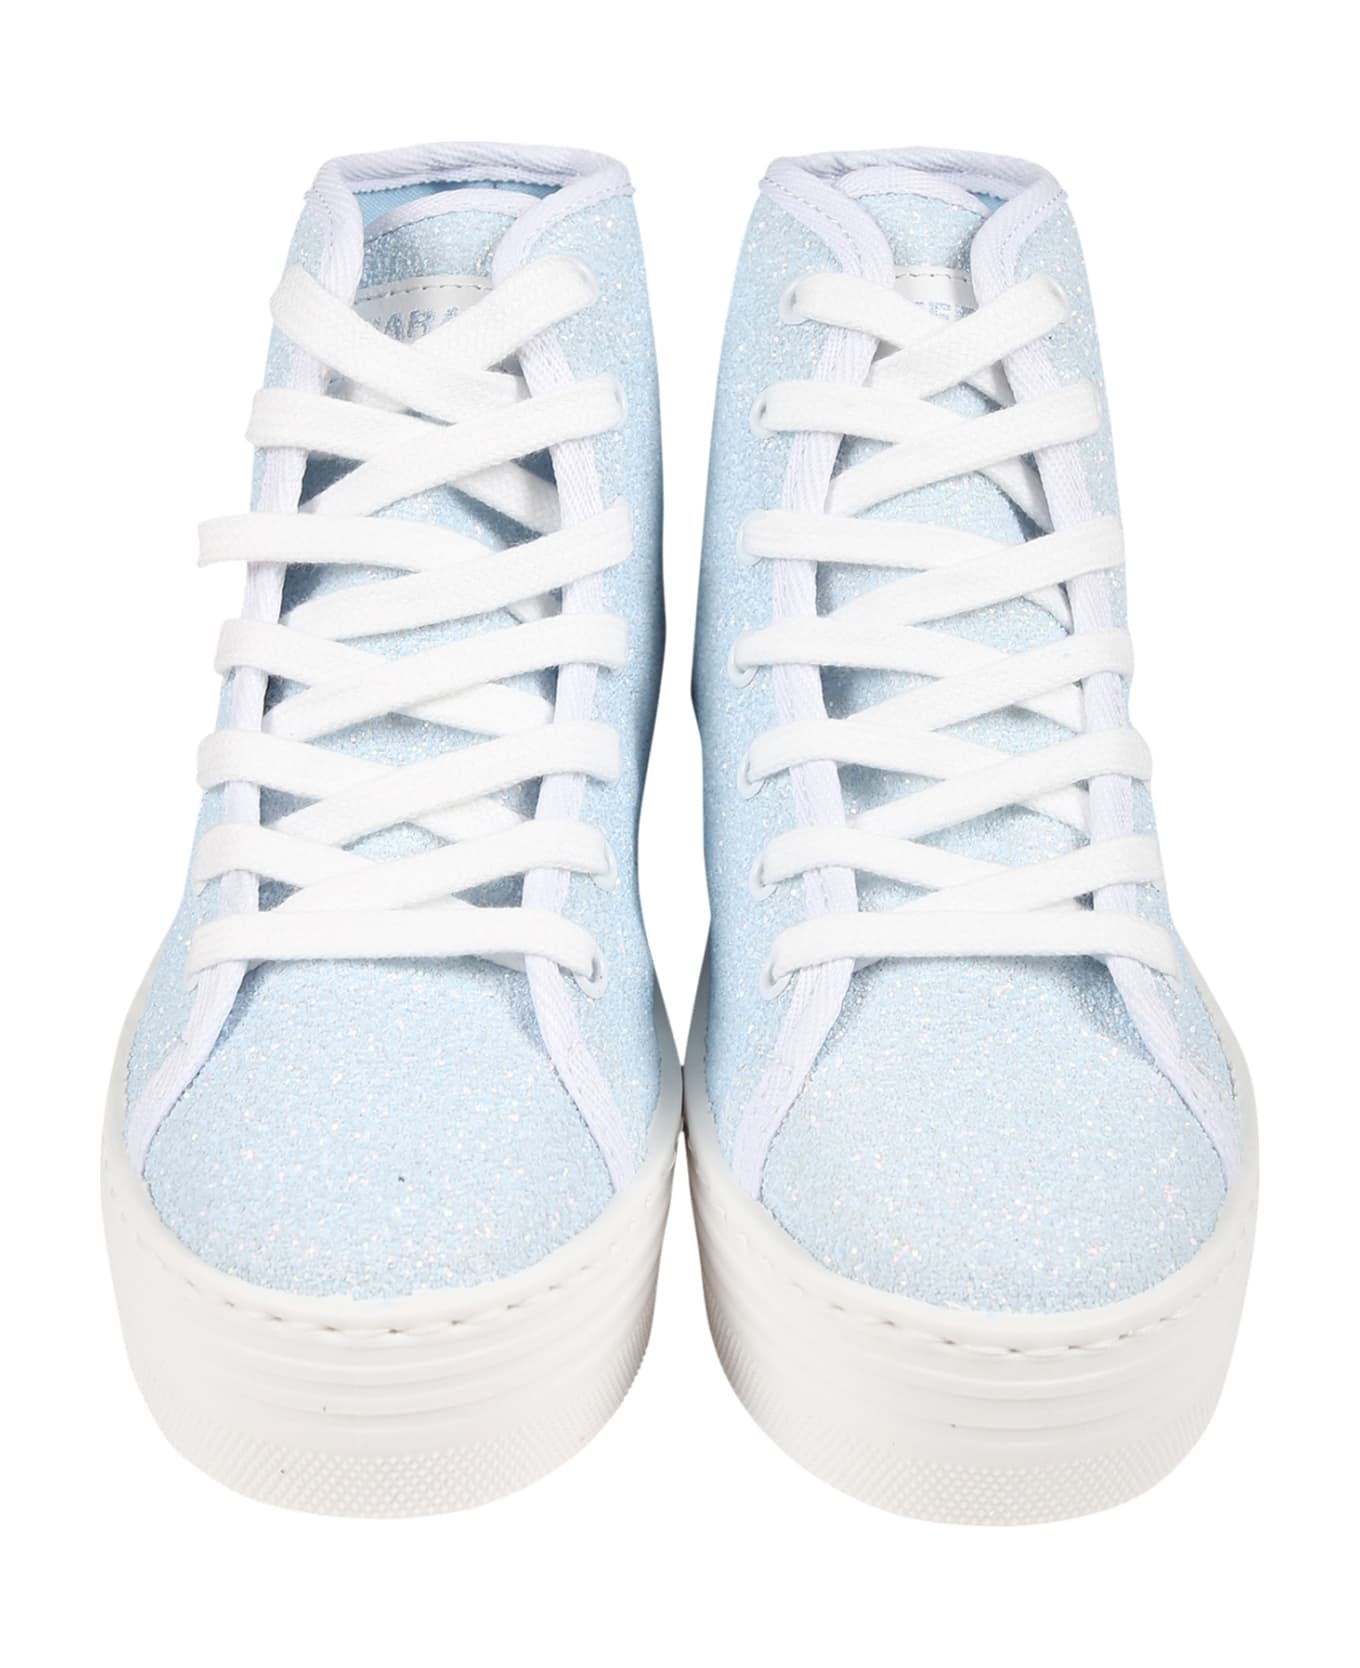 Chiara Ferragni Light Blue Sneakers For Girl With Wink - Blue シューズ